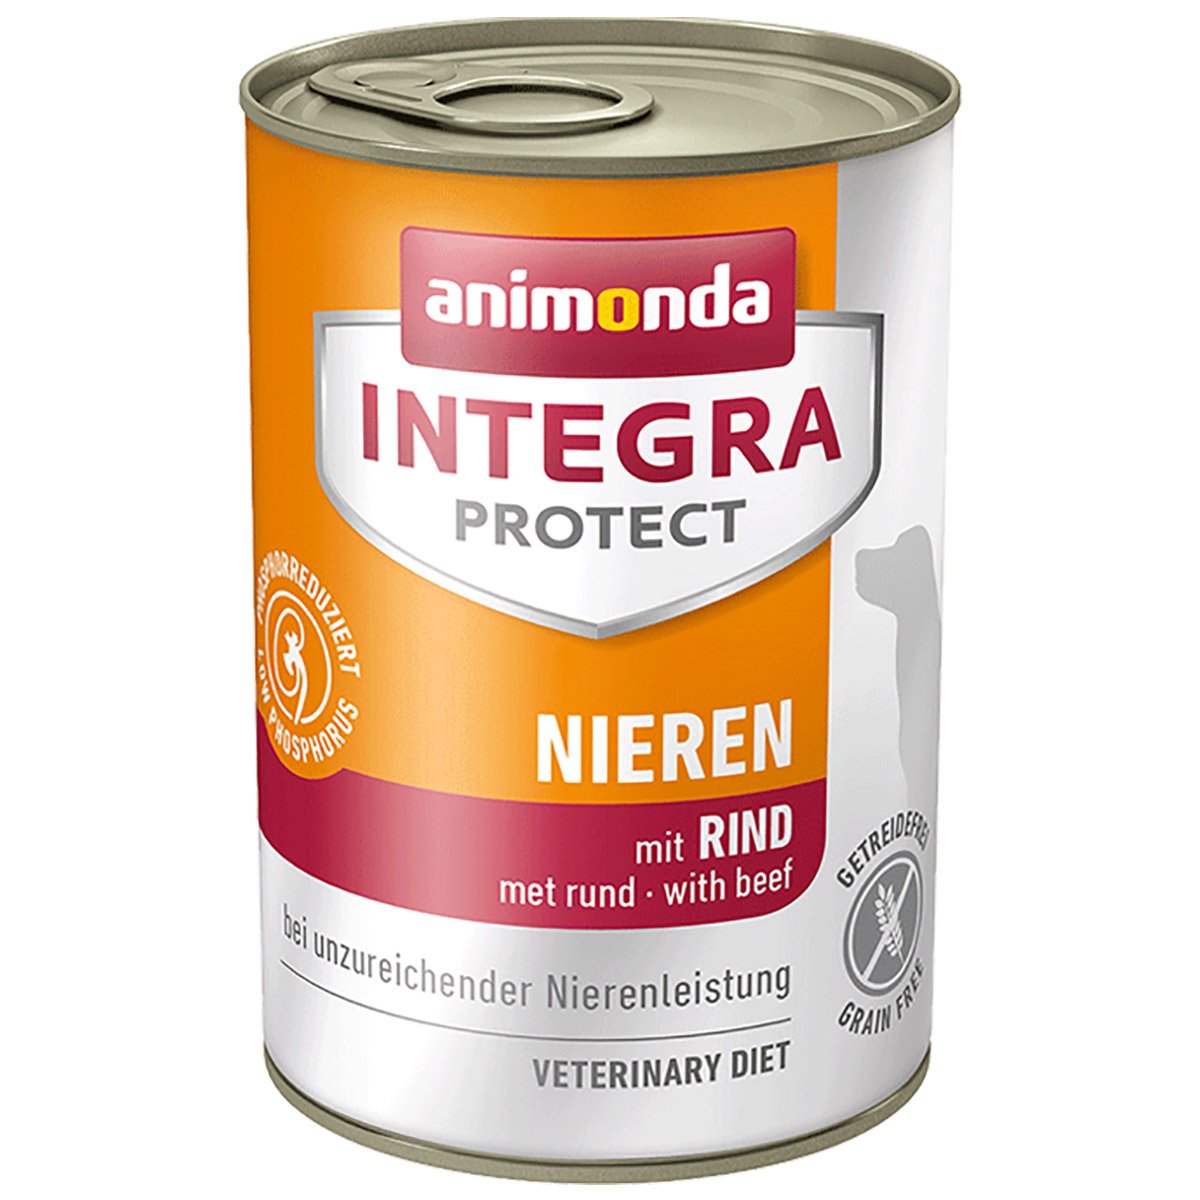 animonda Integra Protect Adult chronische Niereninsuffizienz Rind 6x400g von animonda Integra Protect